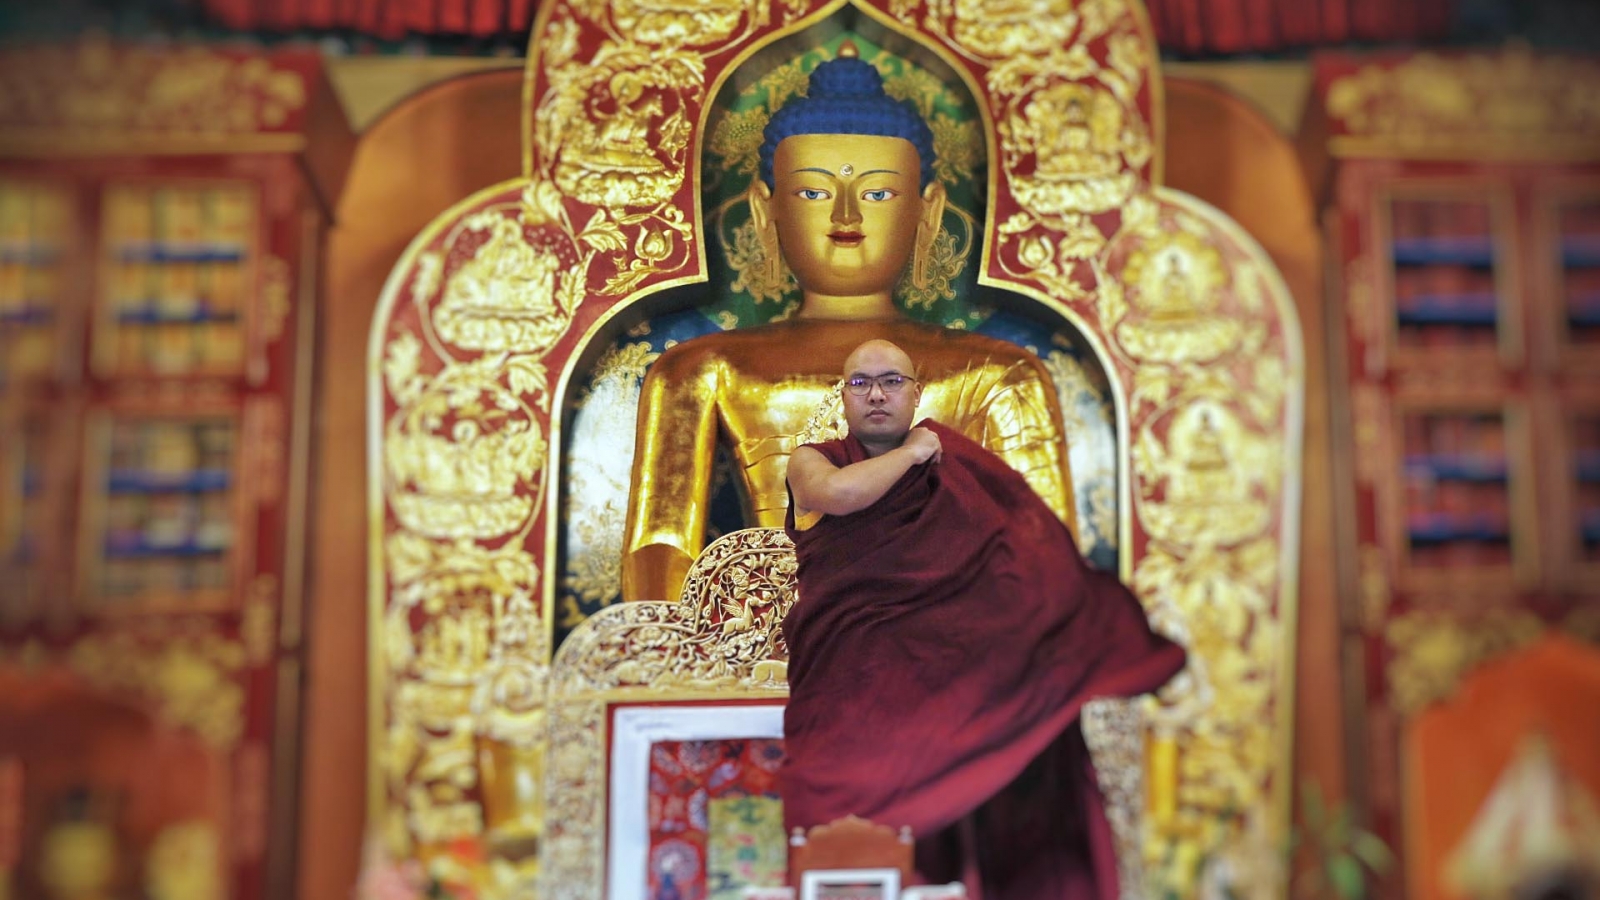 Karmapa in front of Buddha statue